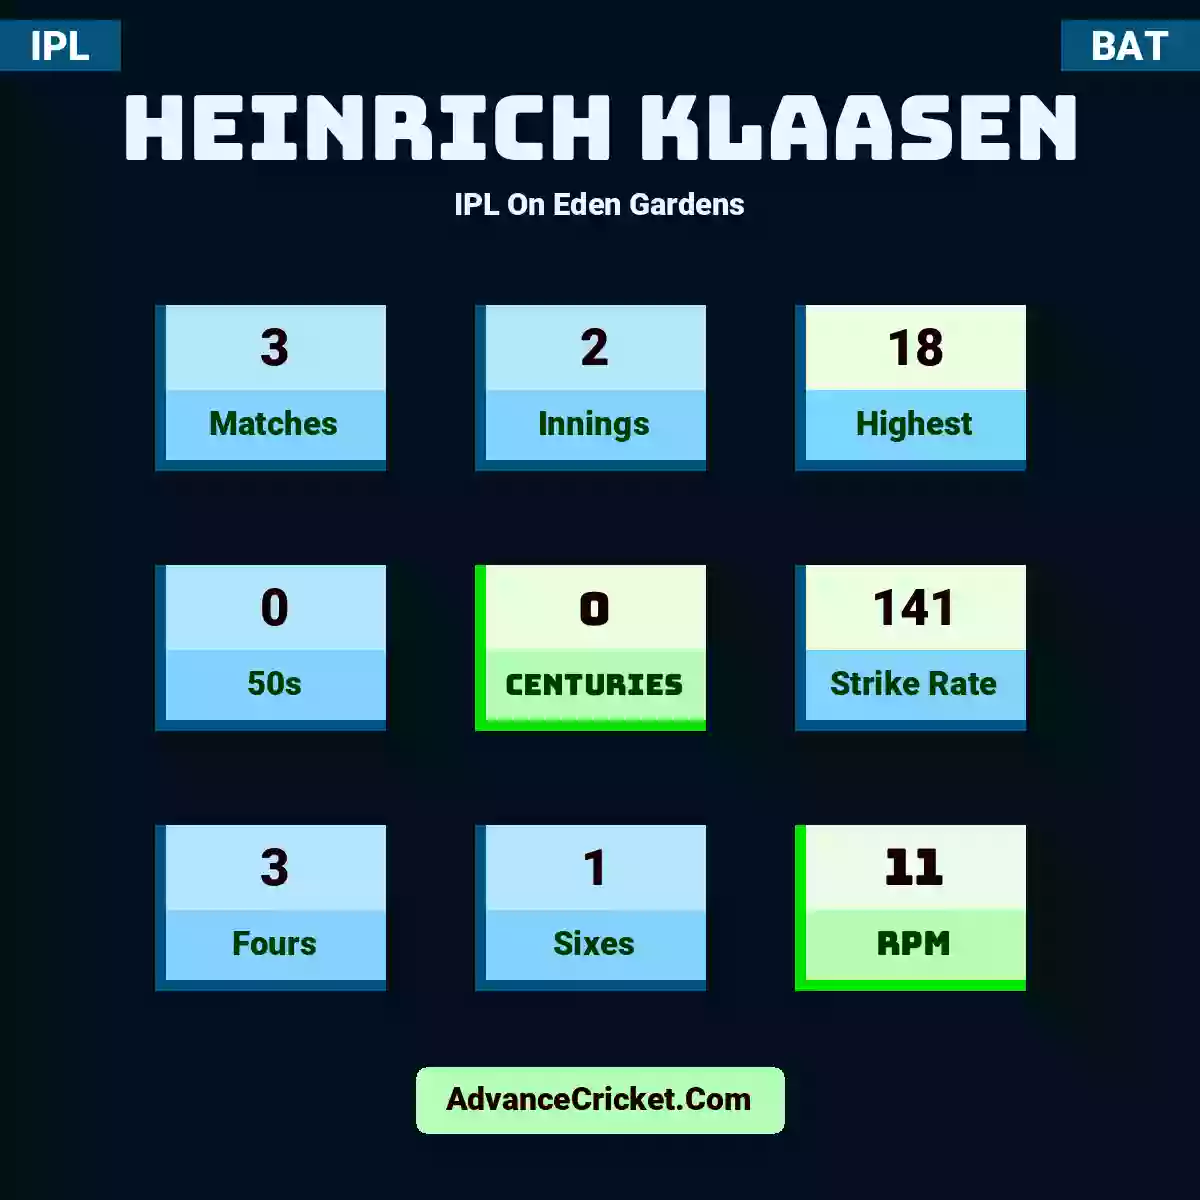 Heinrich Klaasen IPL  On Eden Gardens, Heinrich Klaasen played 3 matches, scored 18 runs as highest, 0 half-centuries, and 0 centuries, with a strike rate of 141. H.Klaasen hit 3 fours and 1 sixes, with an RPM of 11.